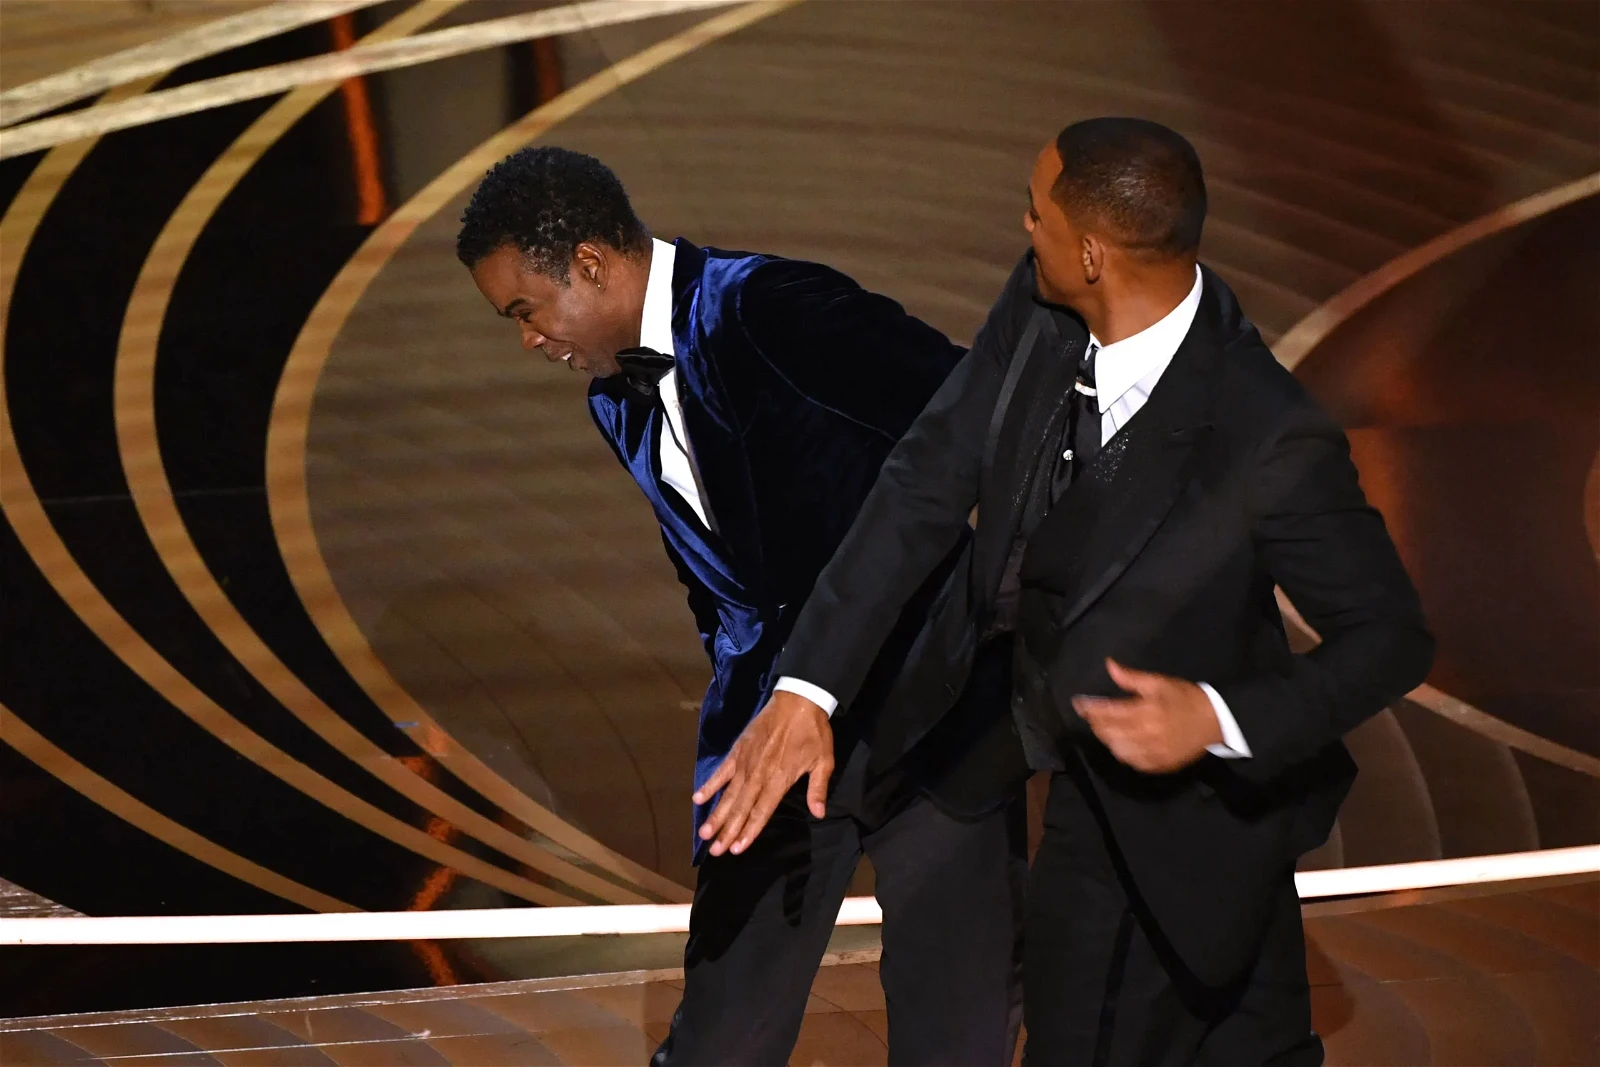 Will Smith smacked Chris Rock at Oscars 2022